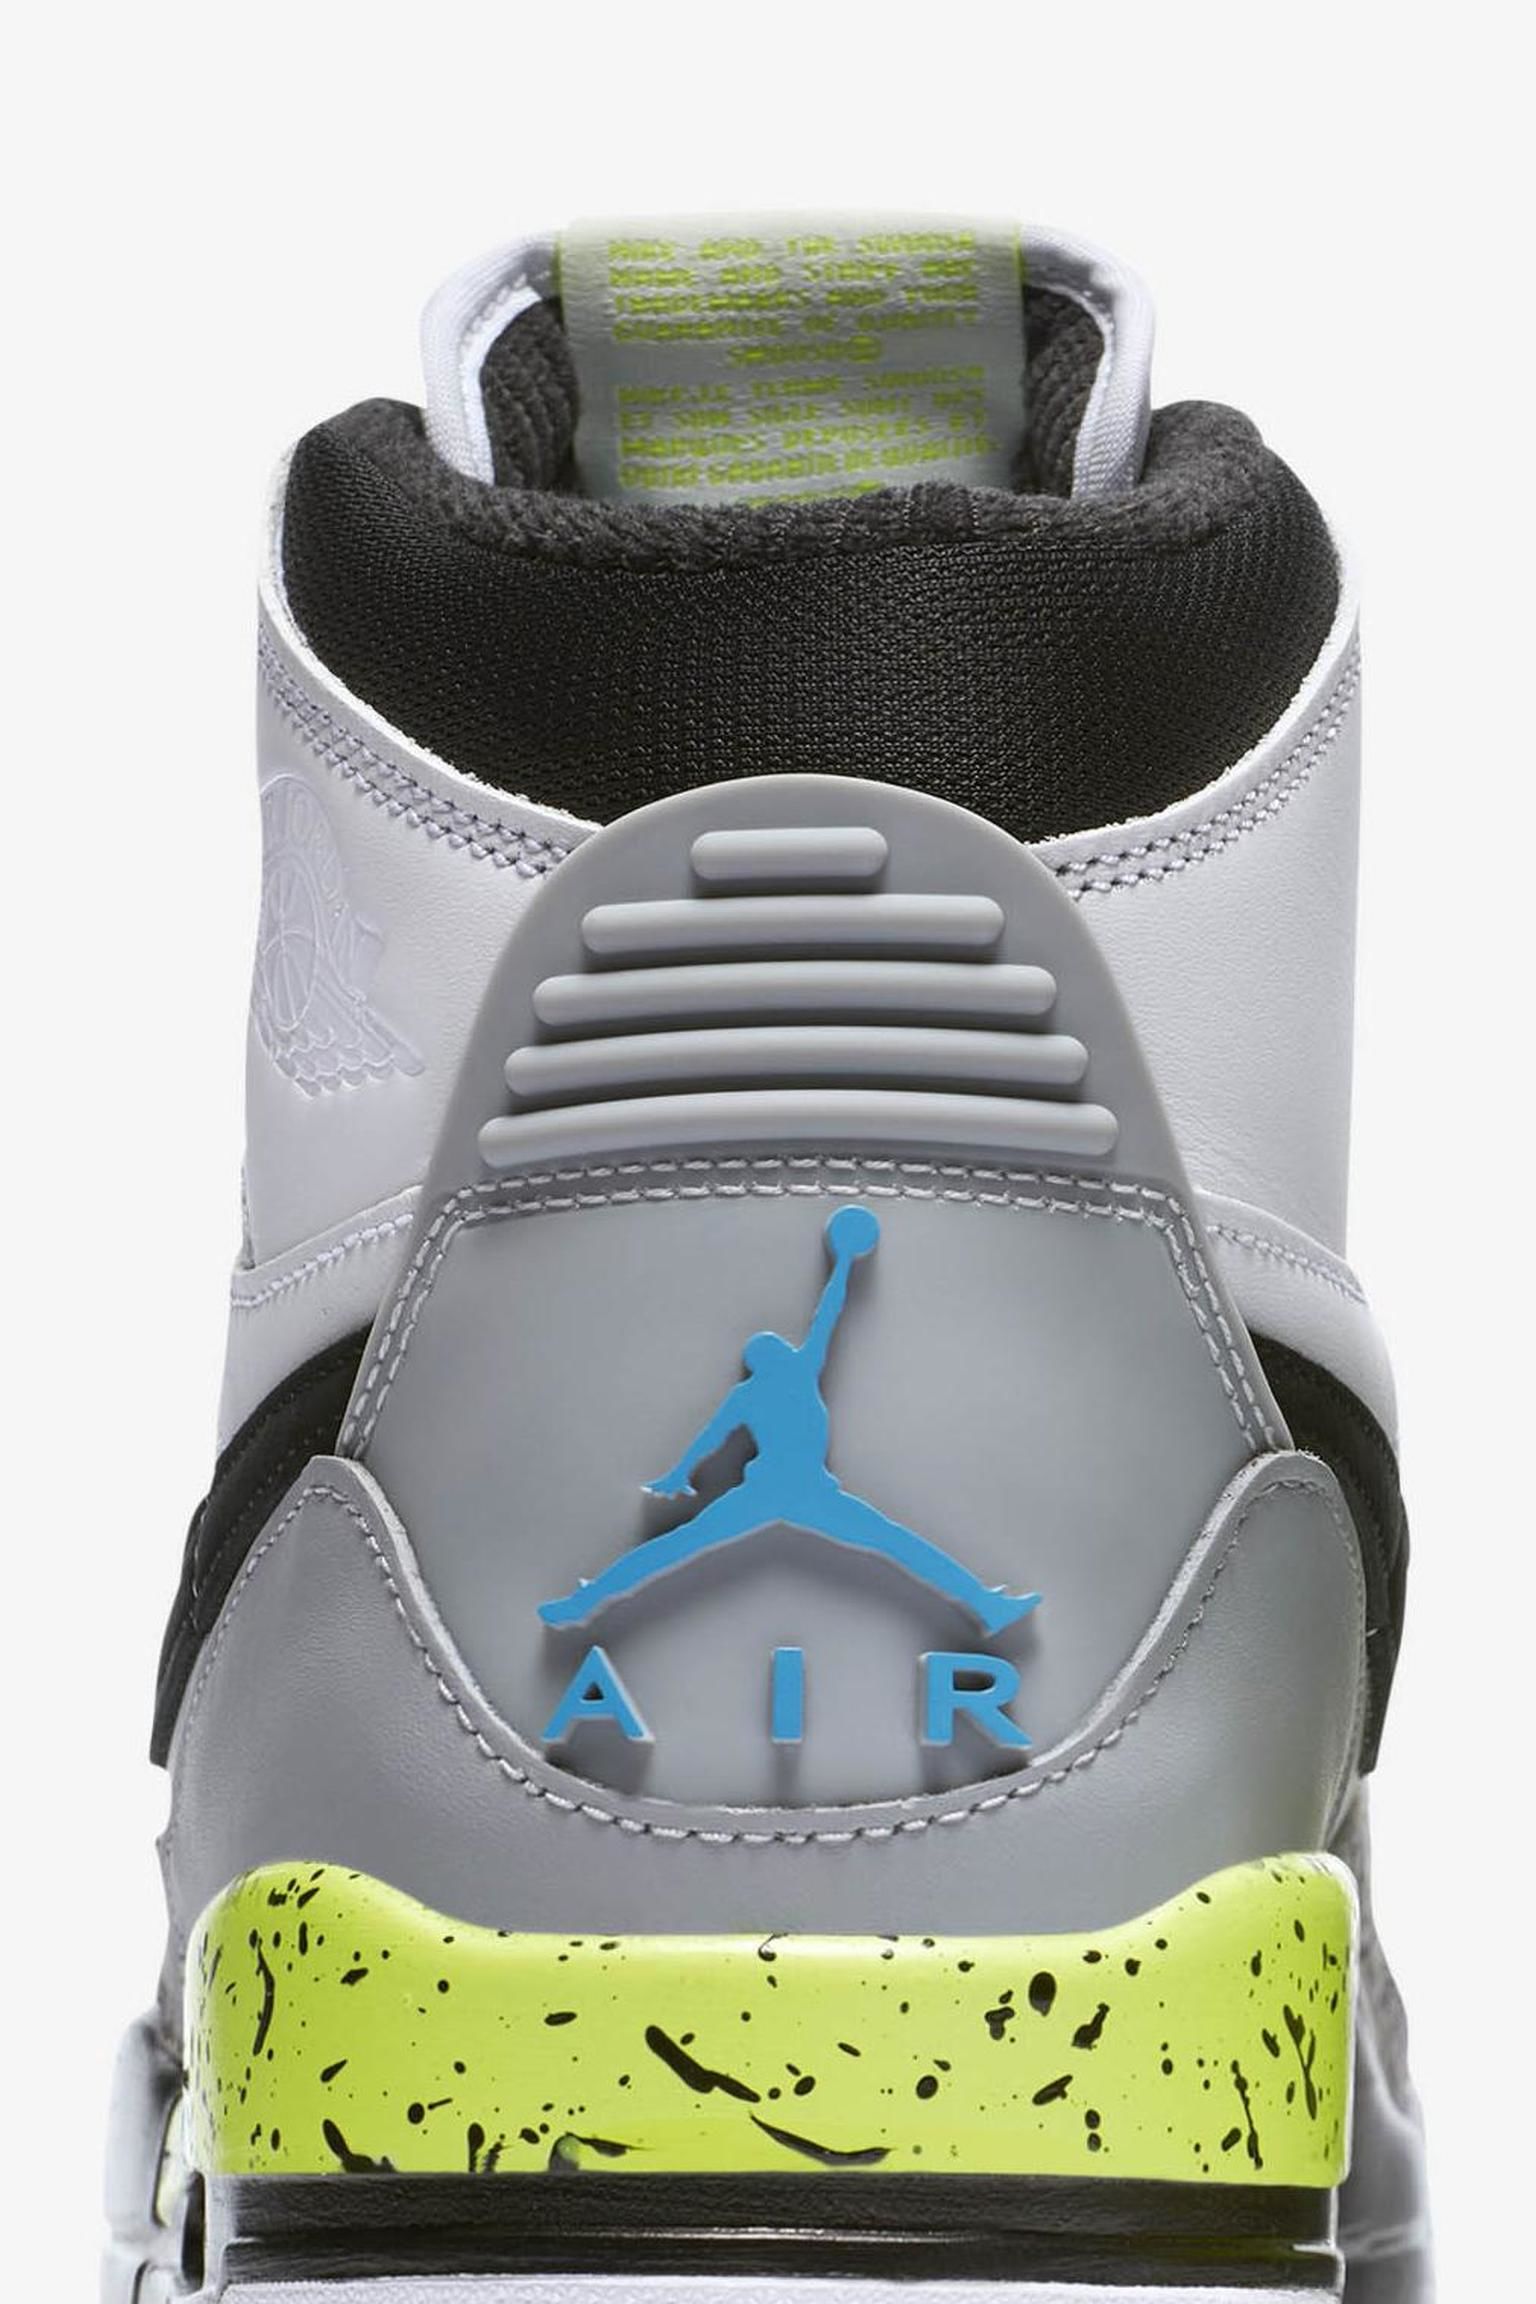 Air Jordan Legacy 312 White Black Volt Release Date Nike Snkrs